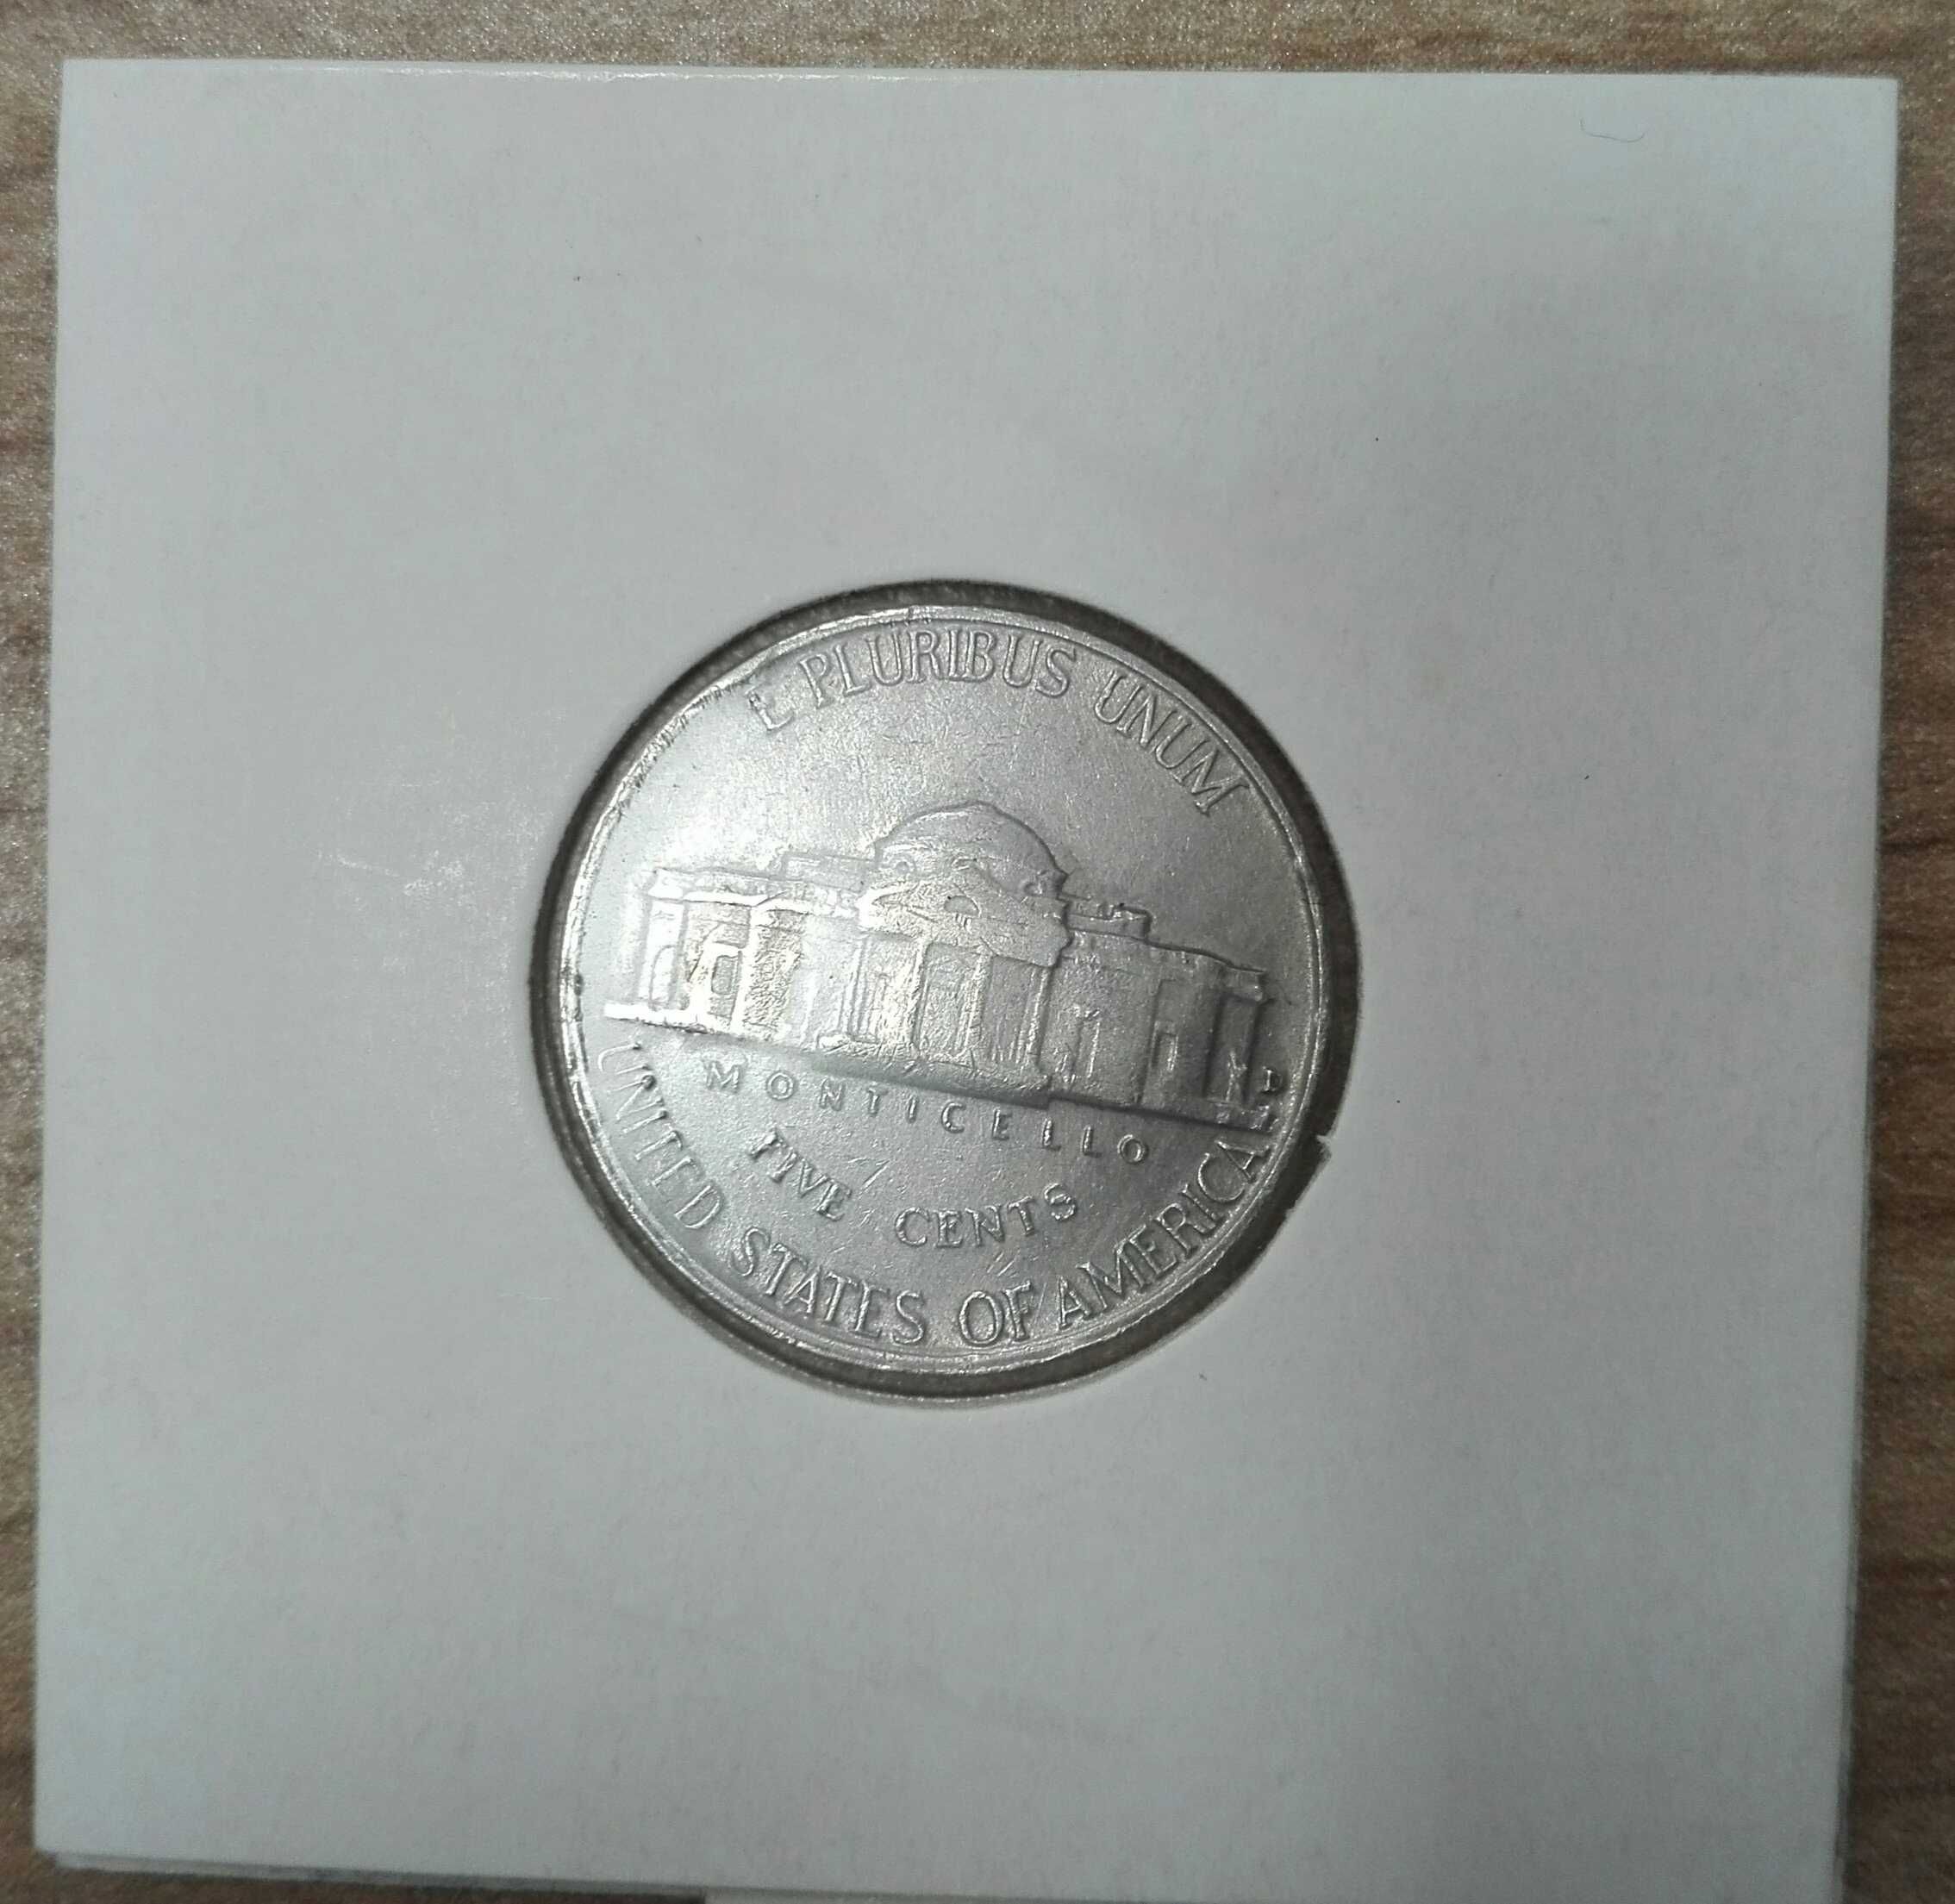 Moneta amerykańska five cents 1964 kolekcjonerska